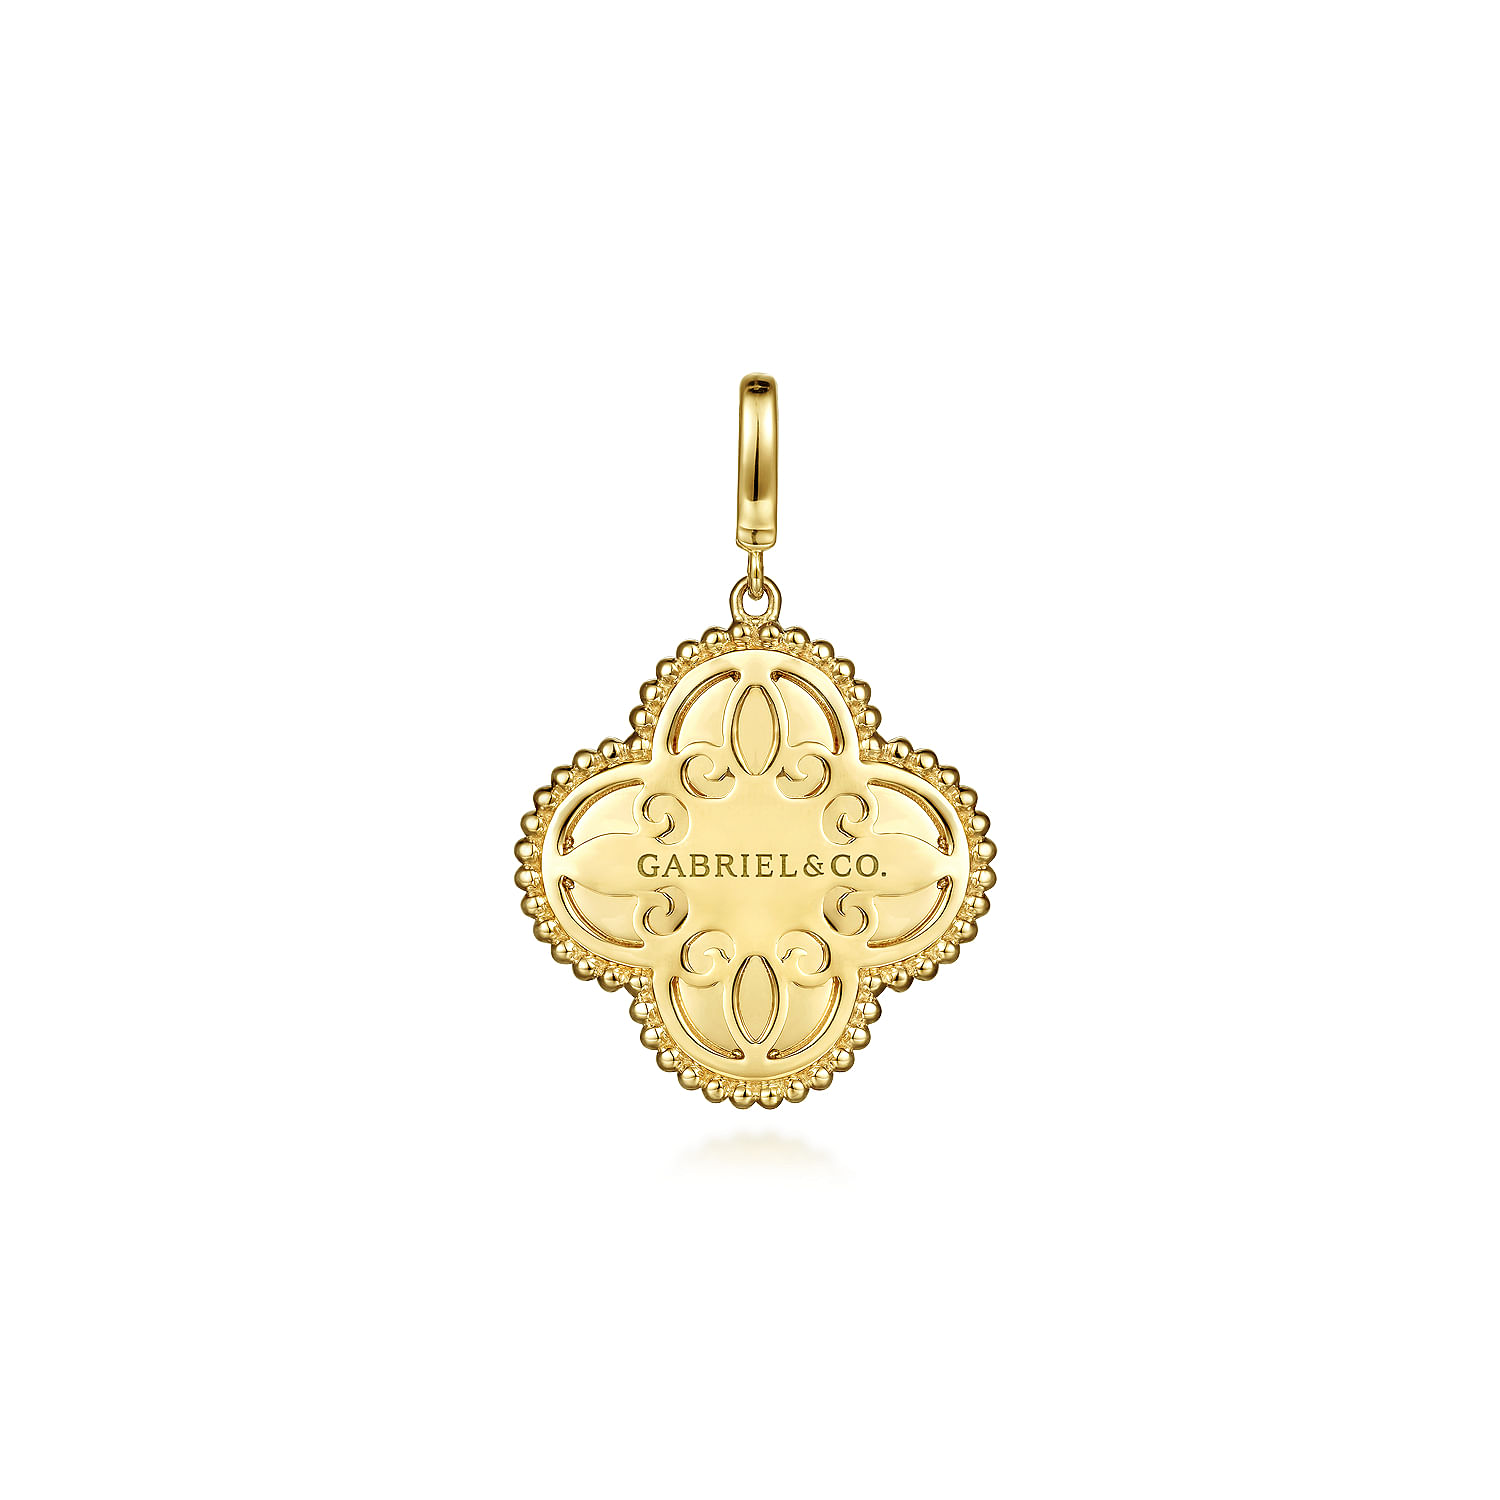 14K Yellow Gold Bujukan & Diamond Cut Diamond Clover Medallion Pendant